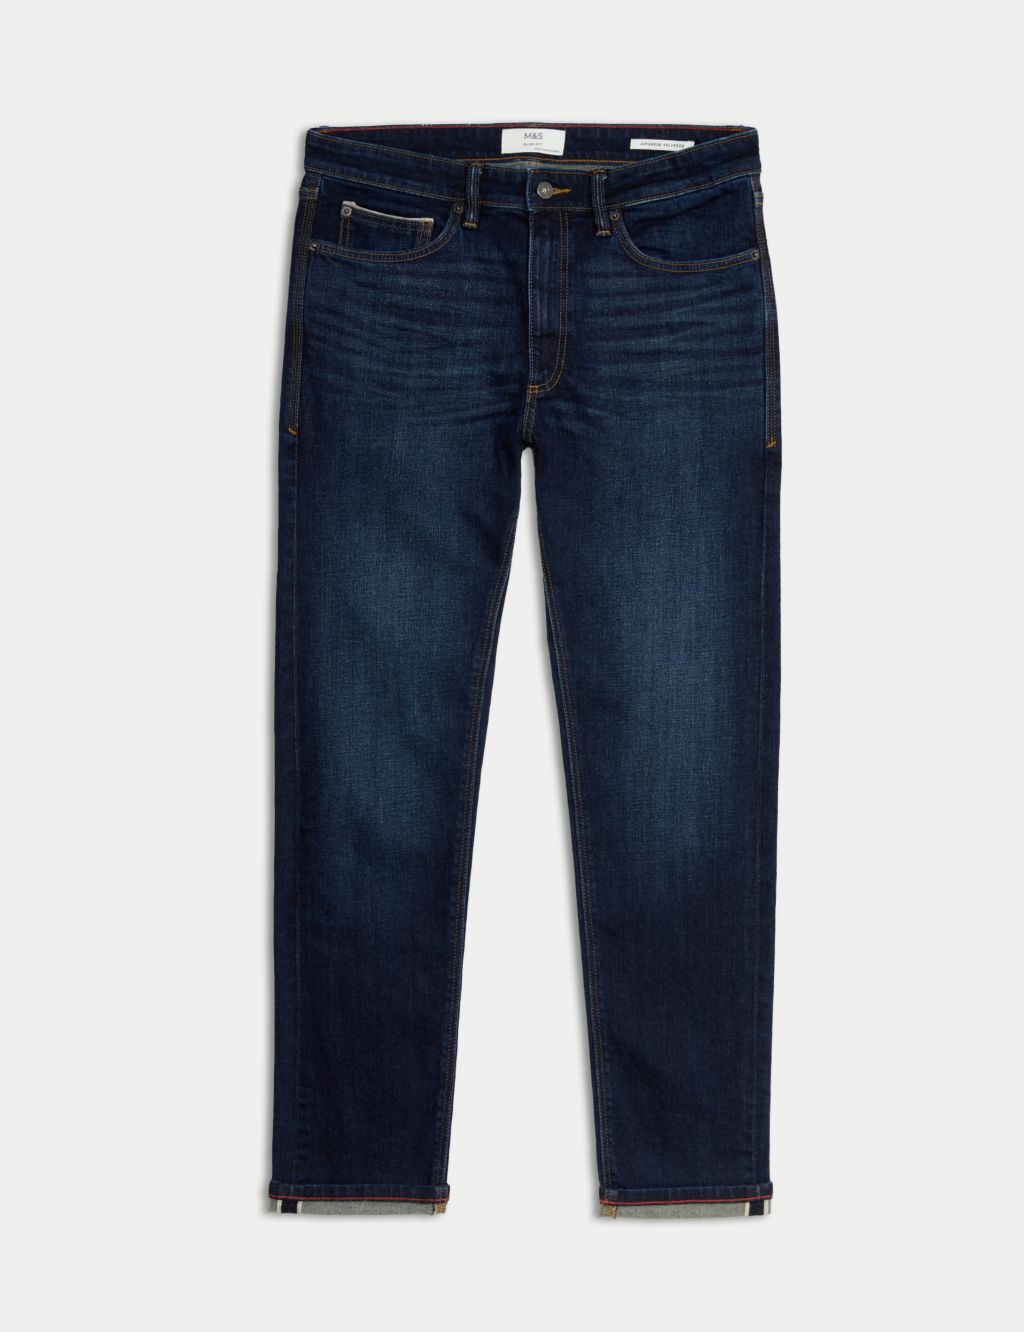 Slim Fit Japanese Selvedge Stretch Jeans image 1